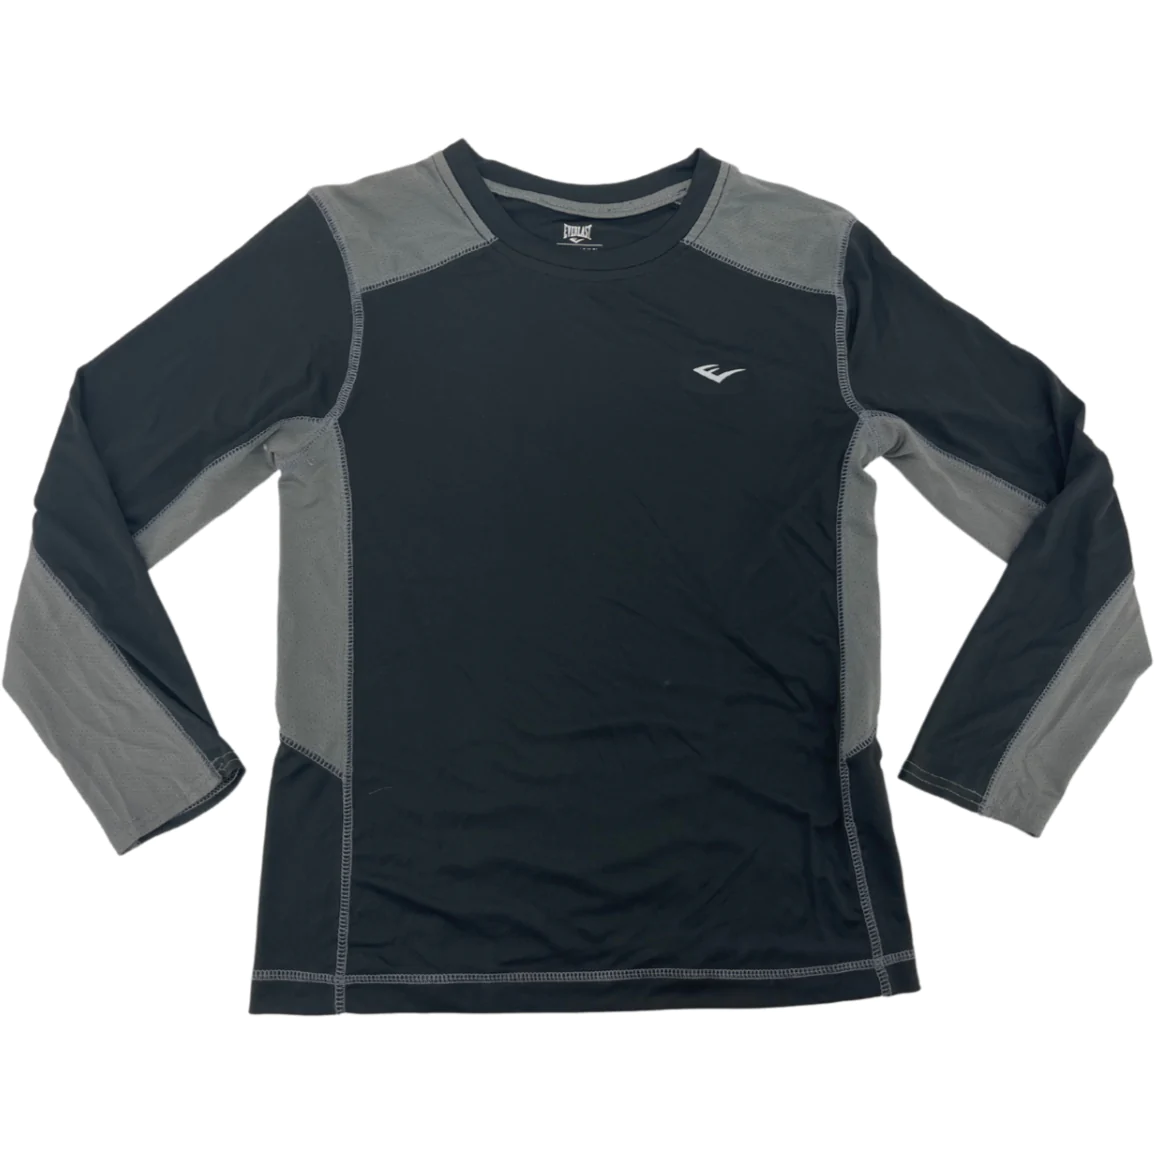 Everlast Boy's Long Sleeve Shirt / Black & Grey / Size Medium